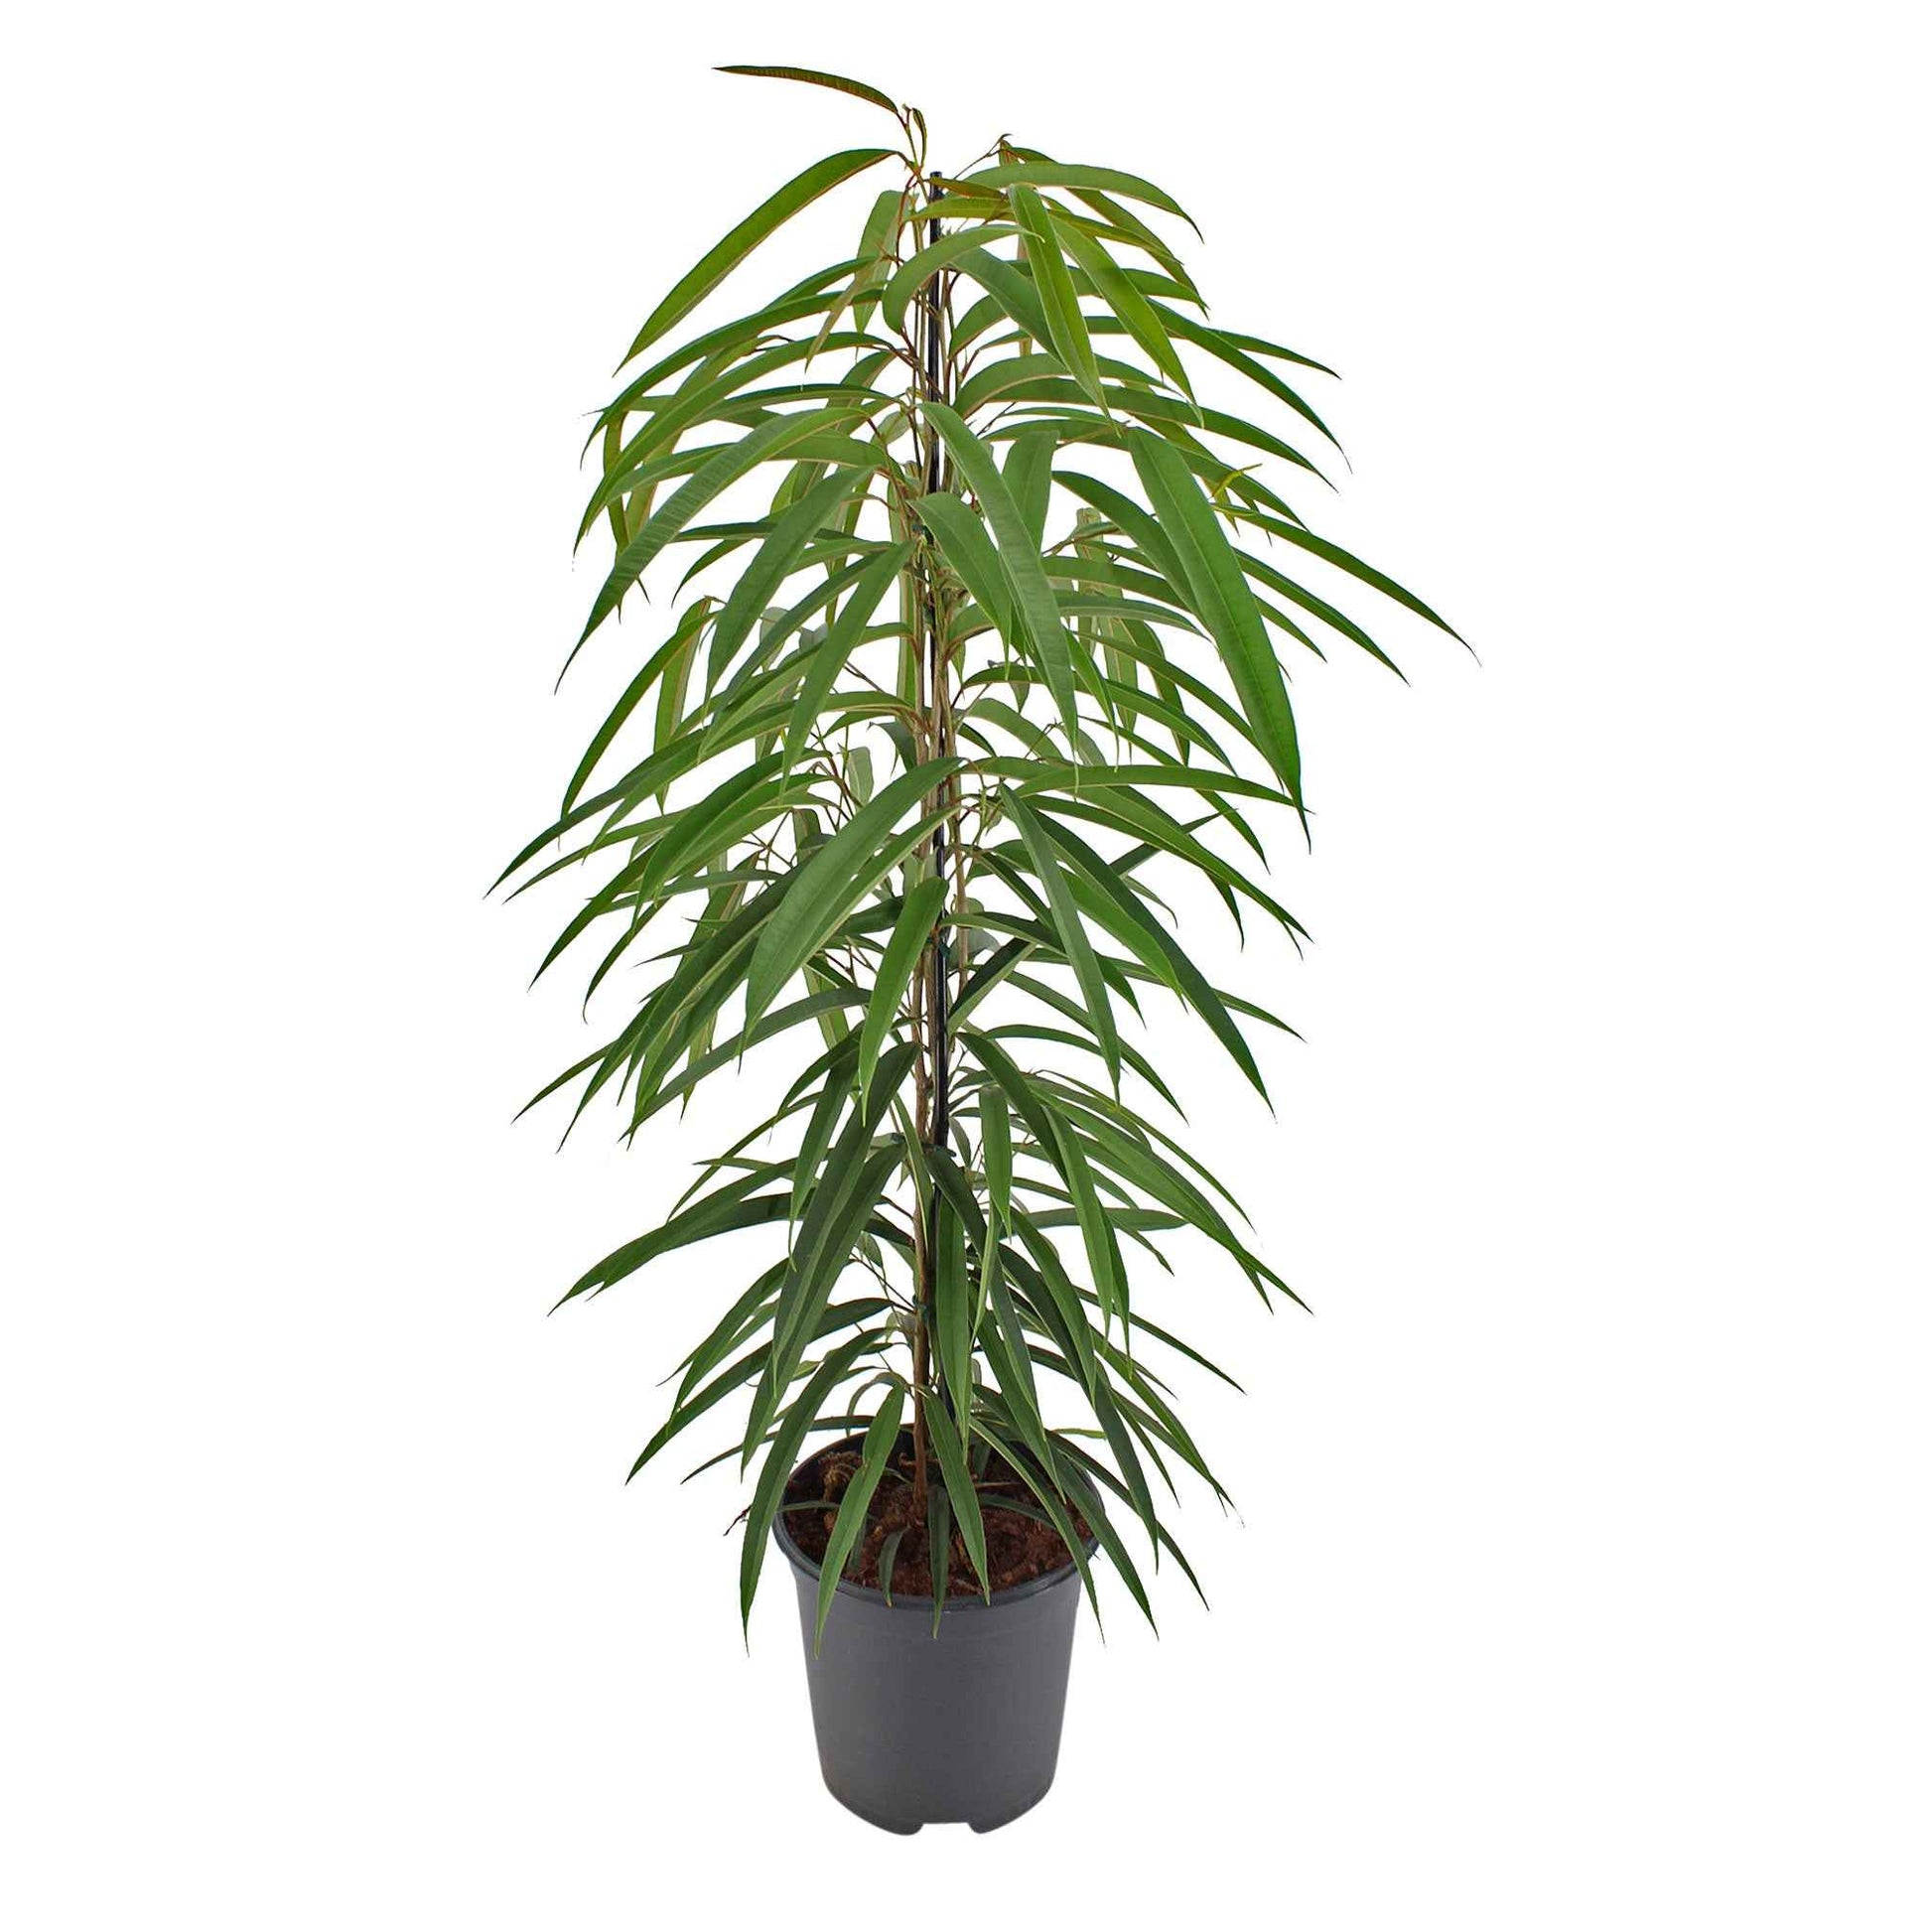 Ficus binnendijkii 'Alii' - Grandes plantes d'intérieur